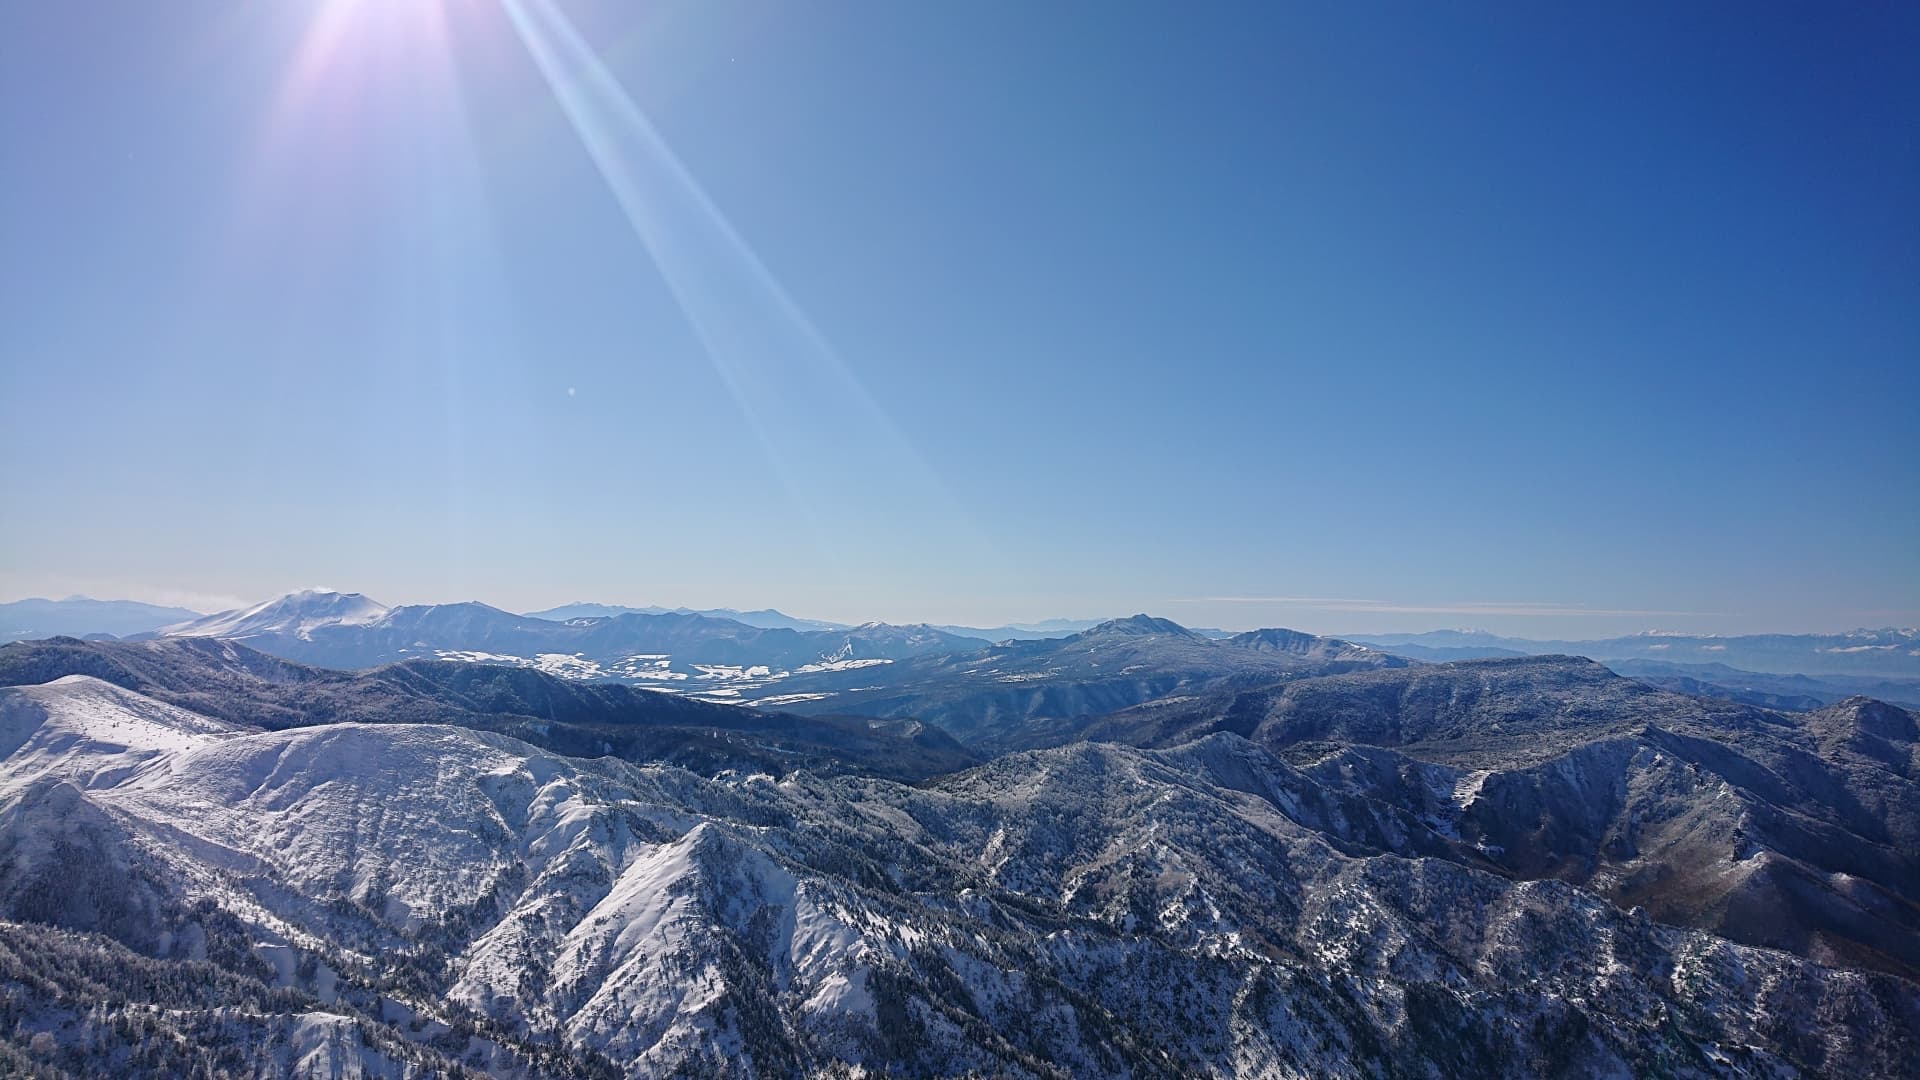 志賀高原の雪景色